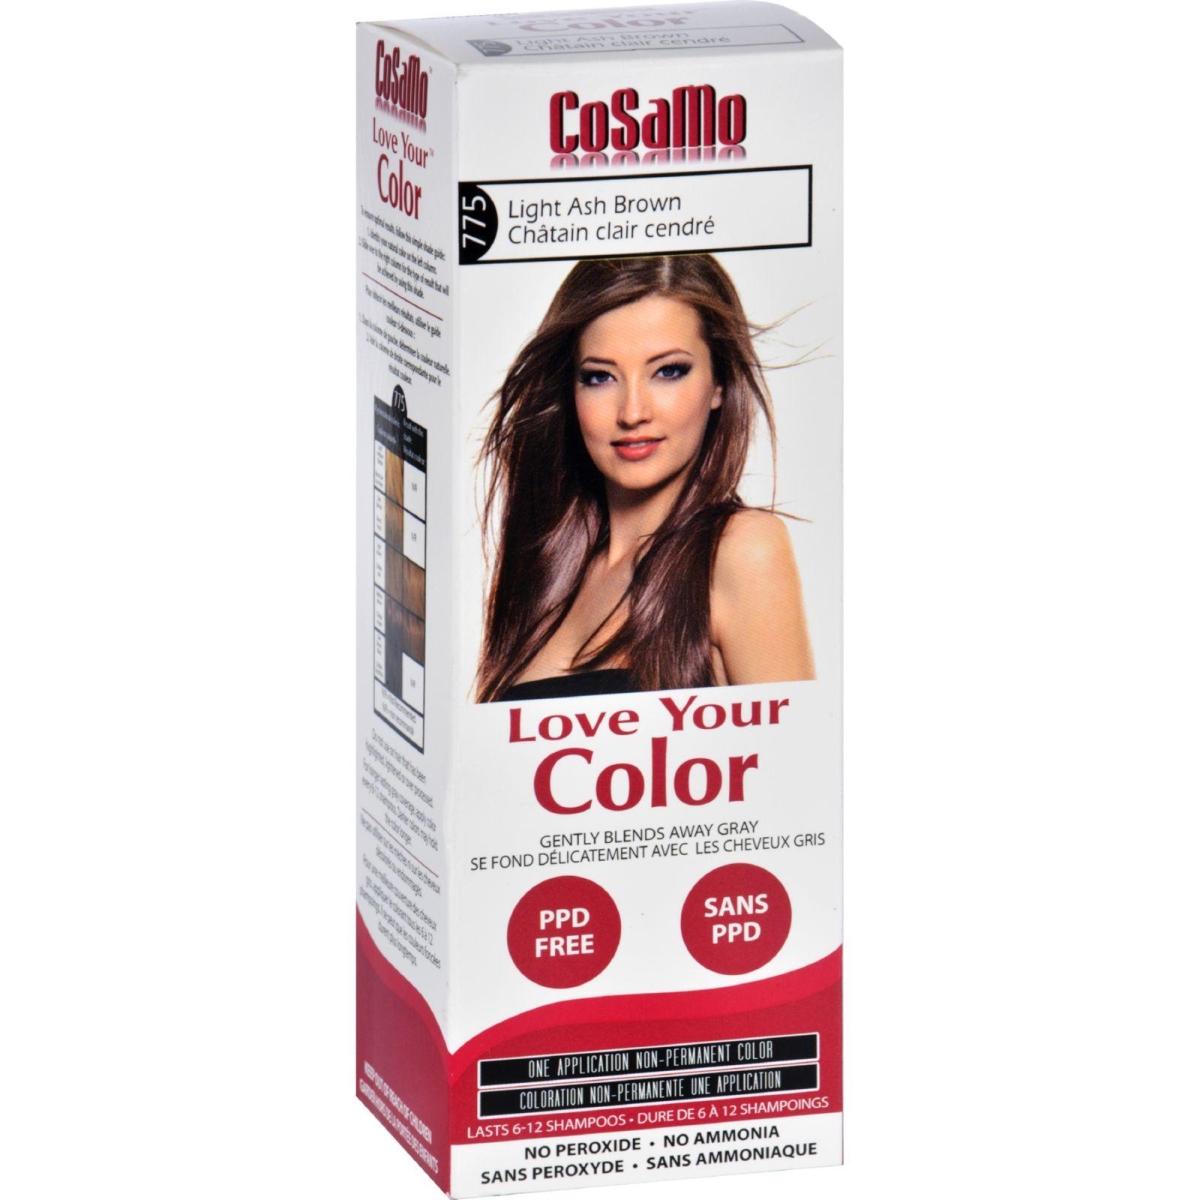 Hair Color Cosamo Non Permanent, Light Ash Brown - 1 Count